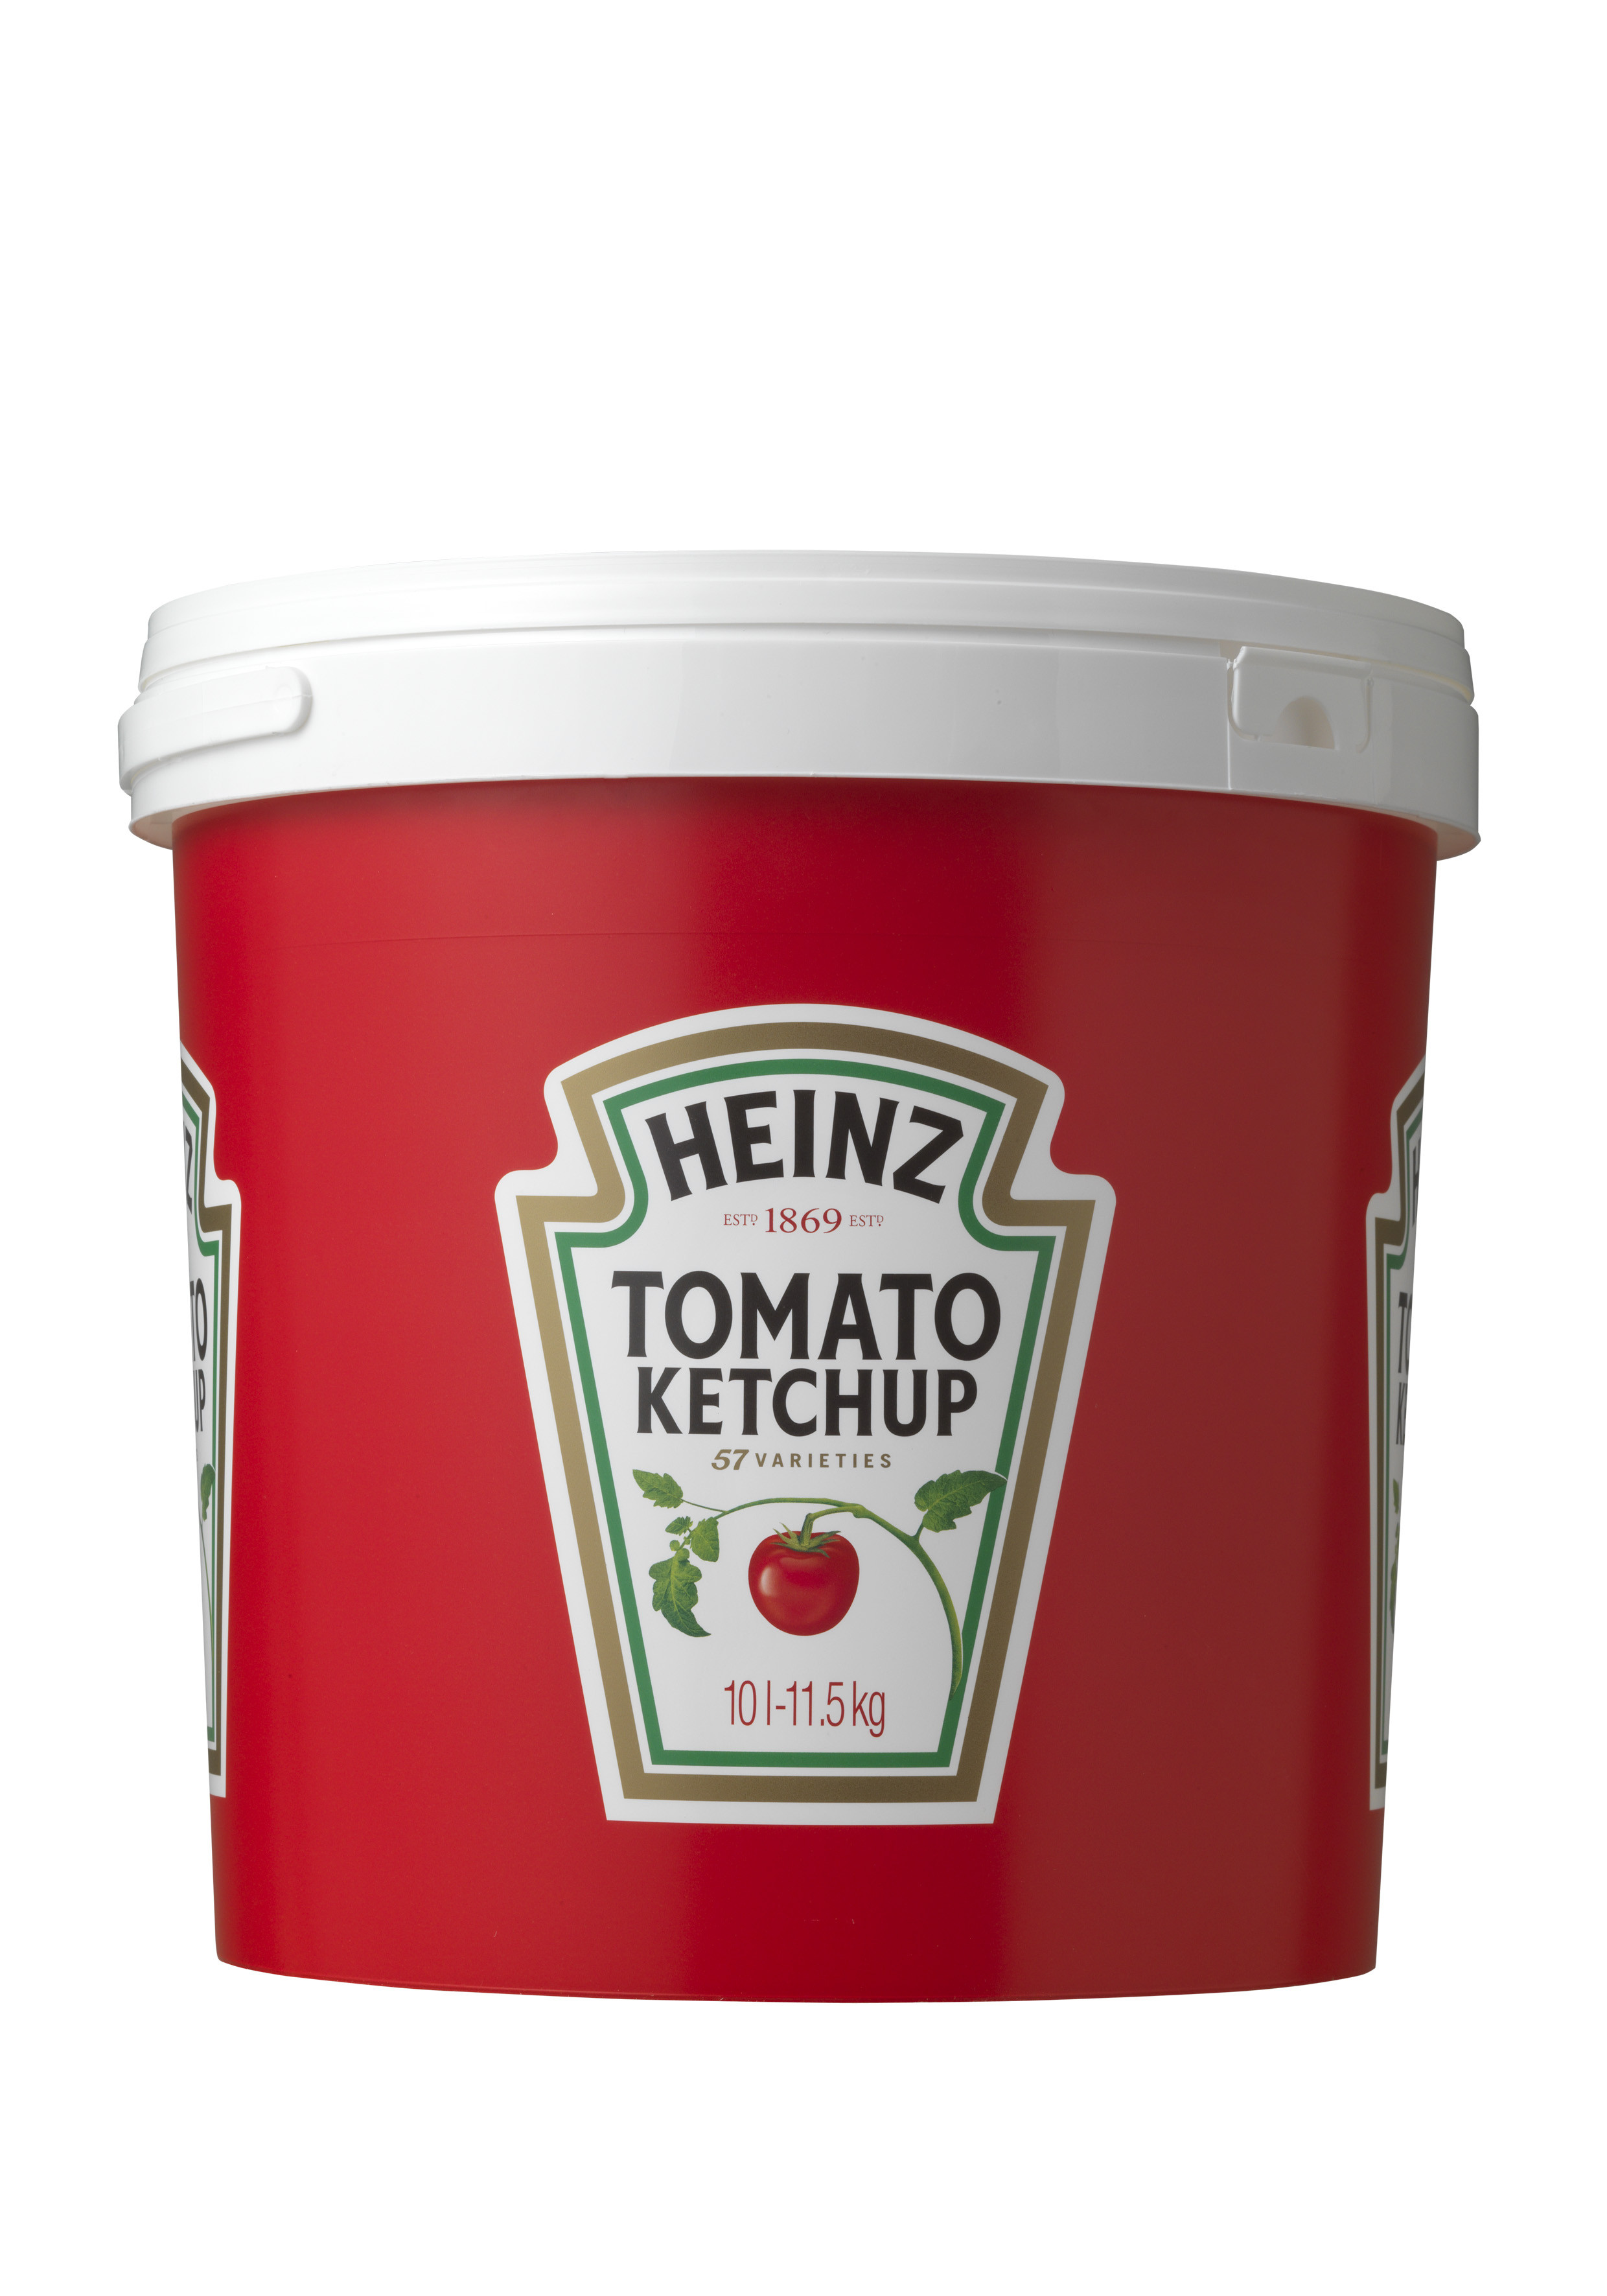 Heinz tomato ketchup 10L seau